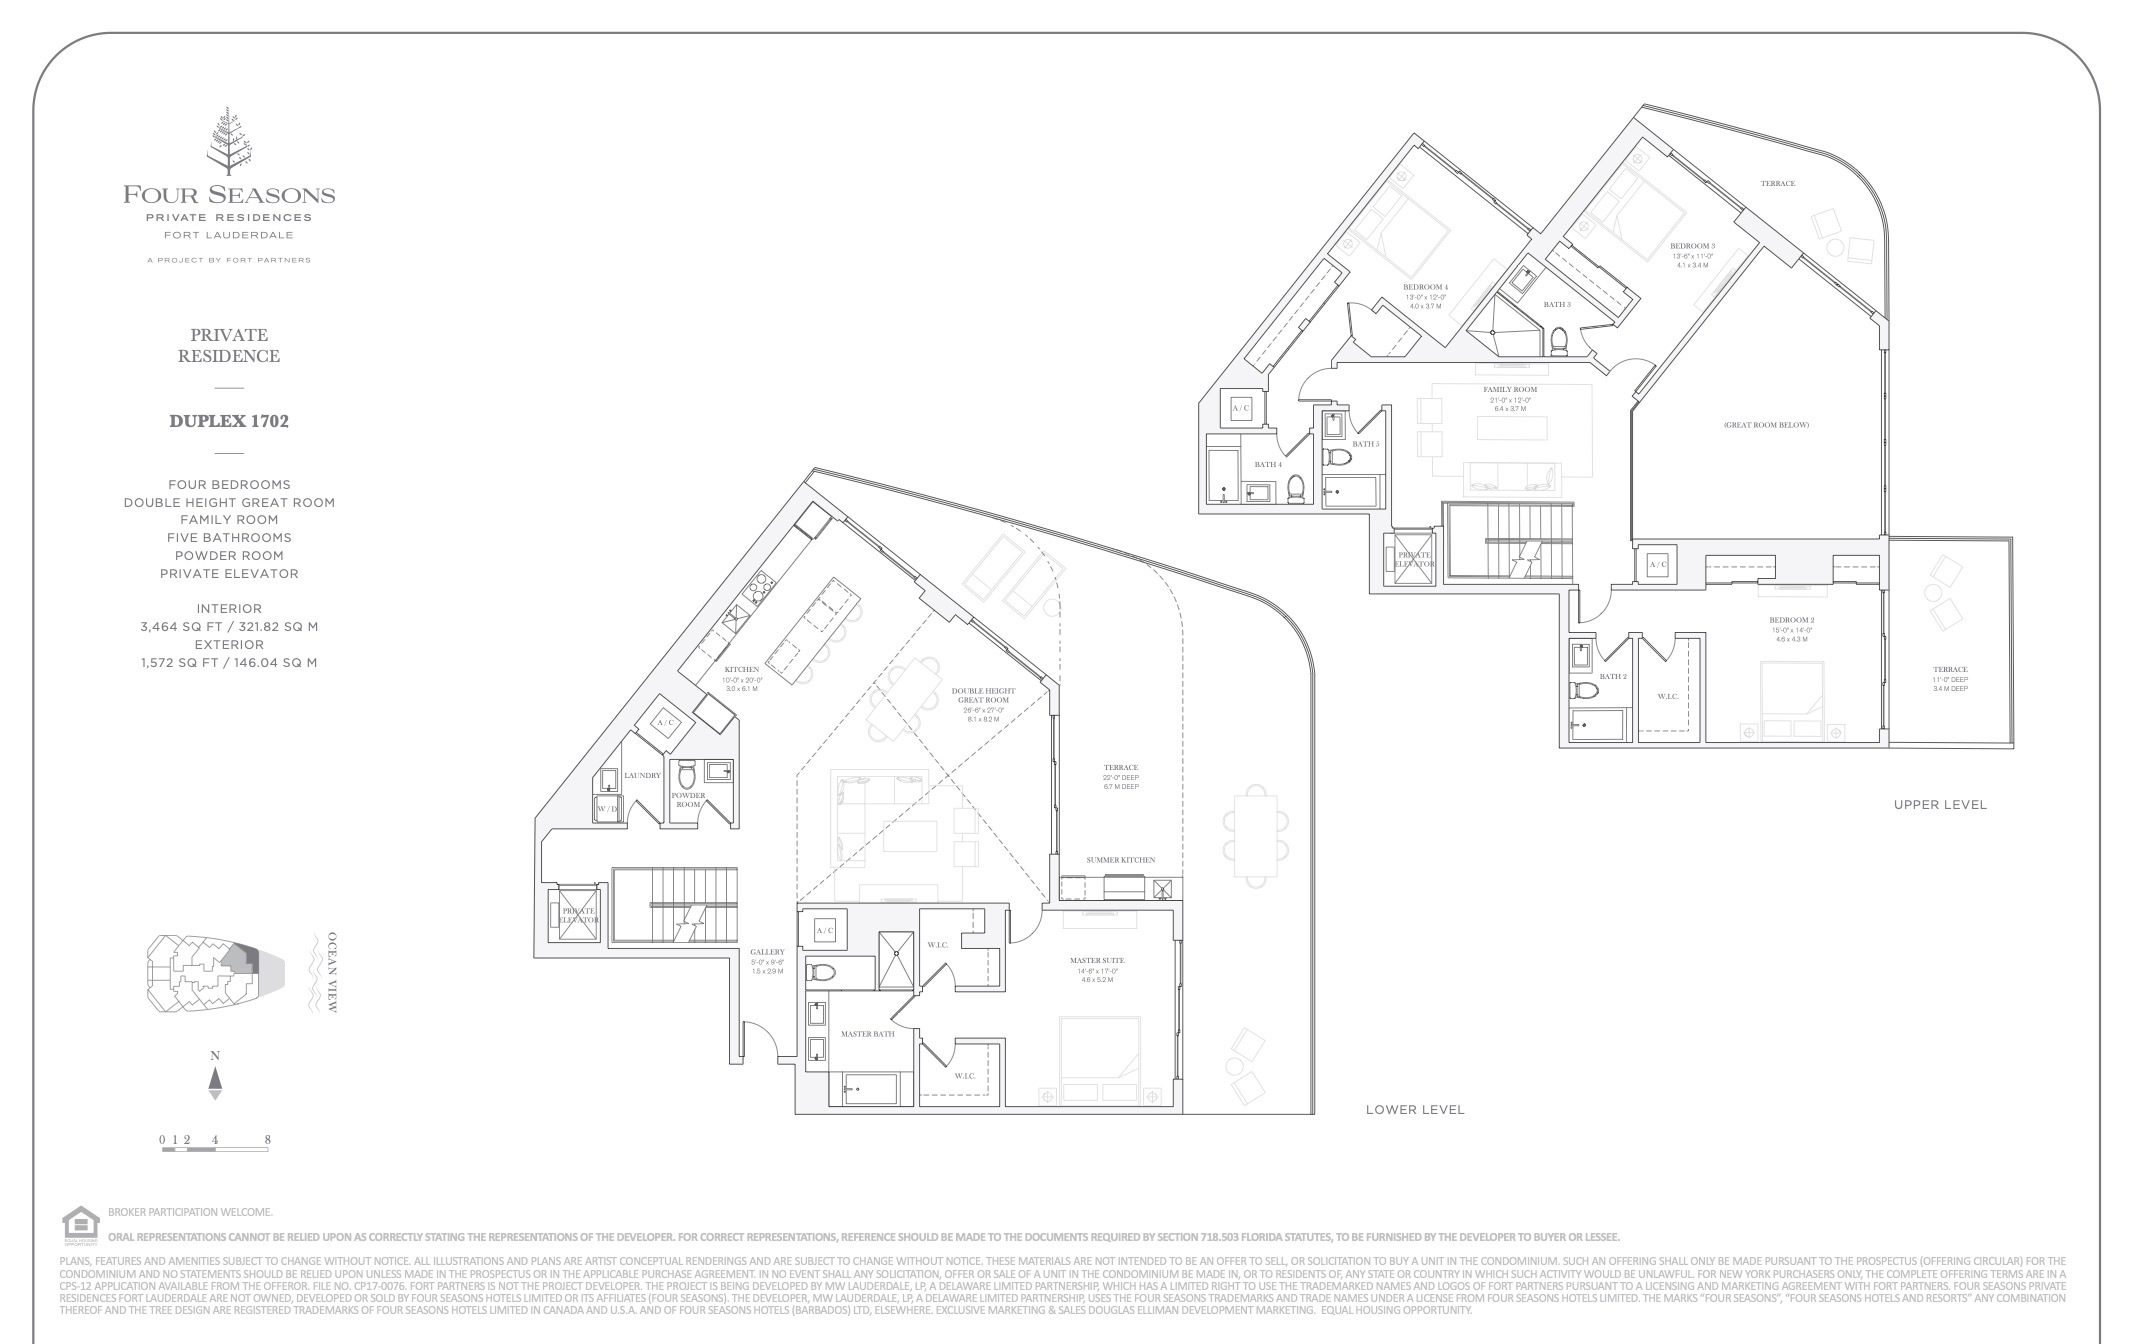 Floor Plan for Four Seasons Fort Lauderdale Floorplans, Duplex 1702